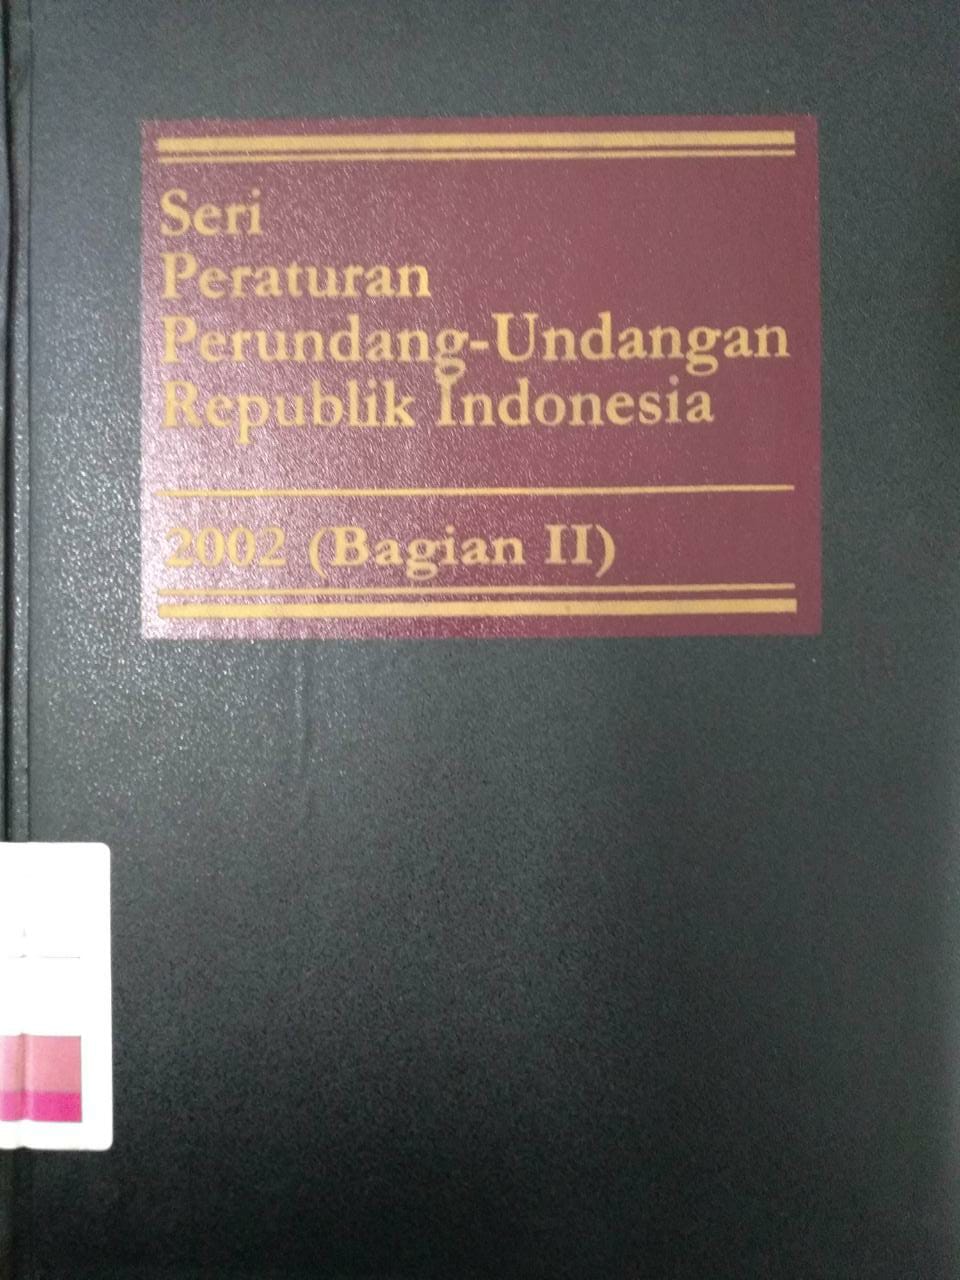 Seri Peraturan Perundang-undangan Republik Indonesia 2002 (Bagian IV) Jilid 2